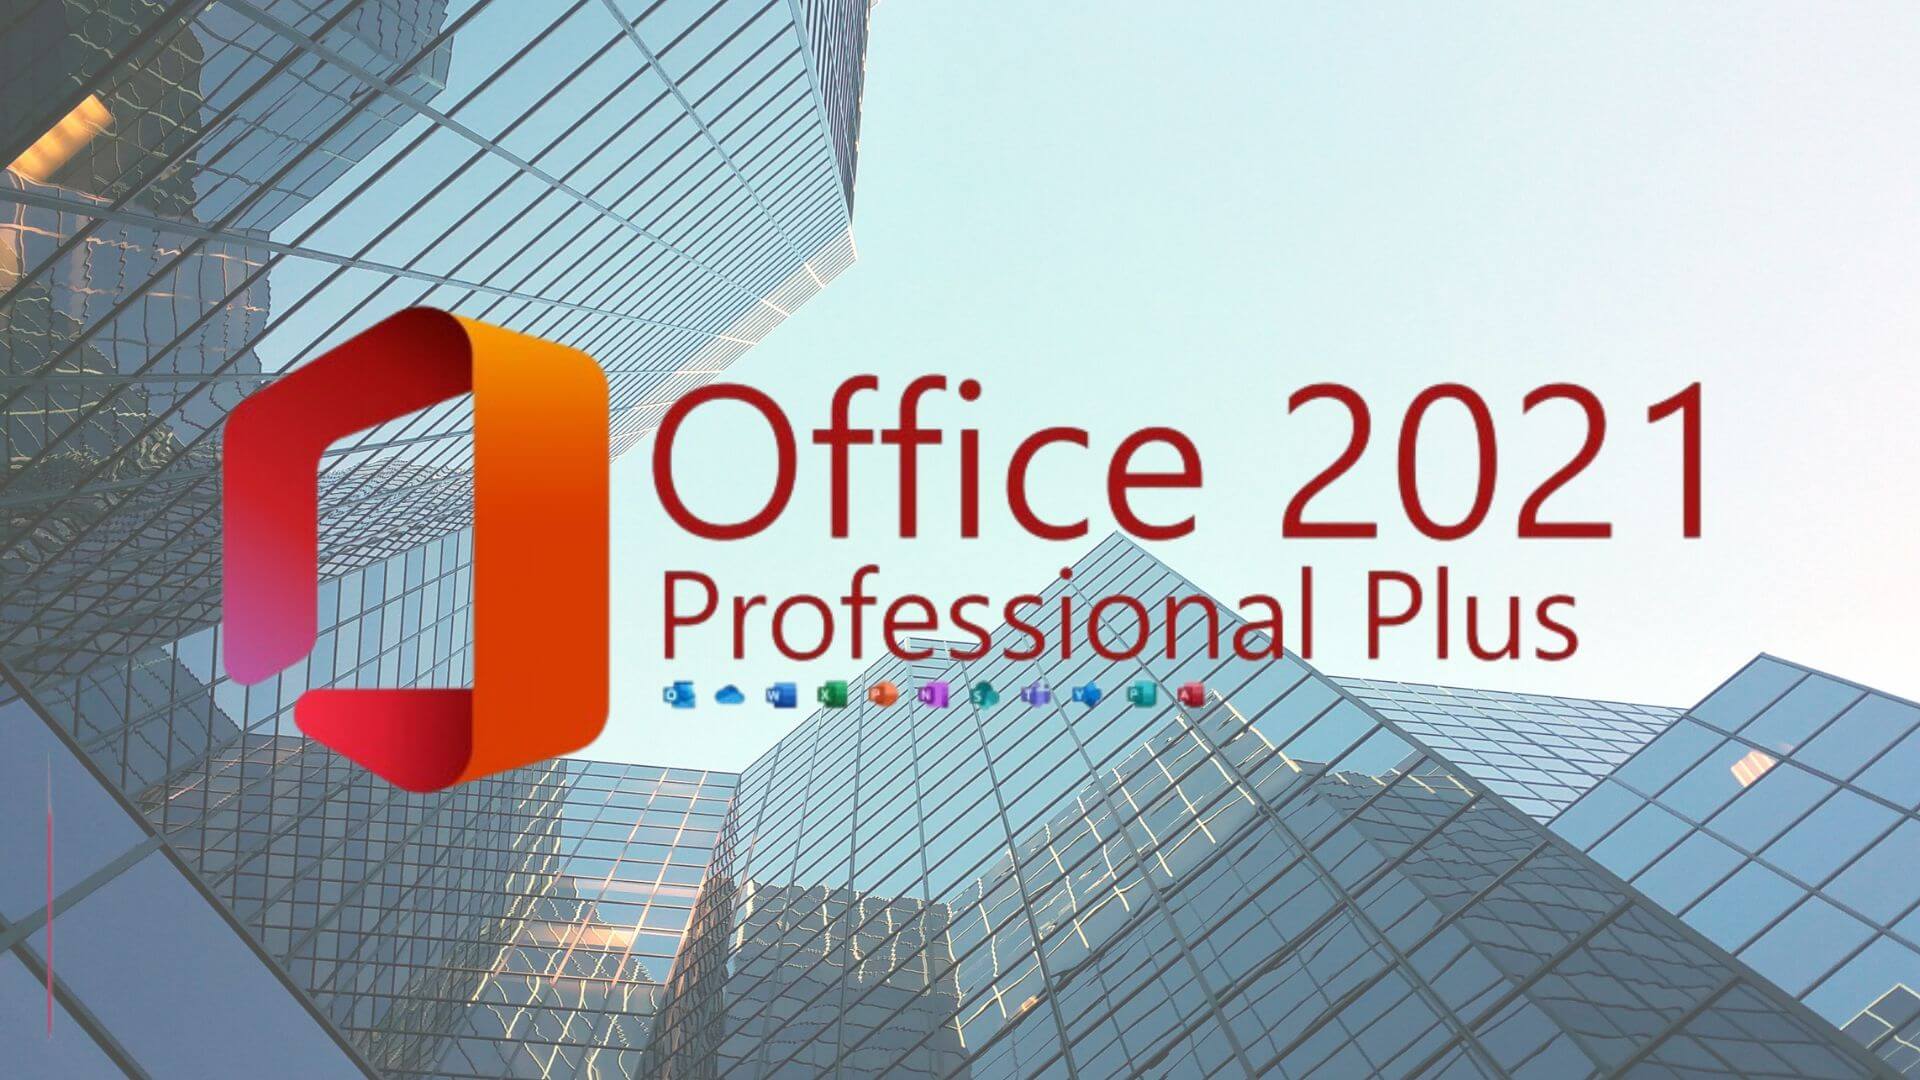 Microsoft Office 2021 Professional Plus descargar